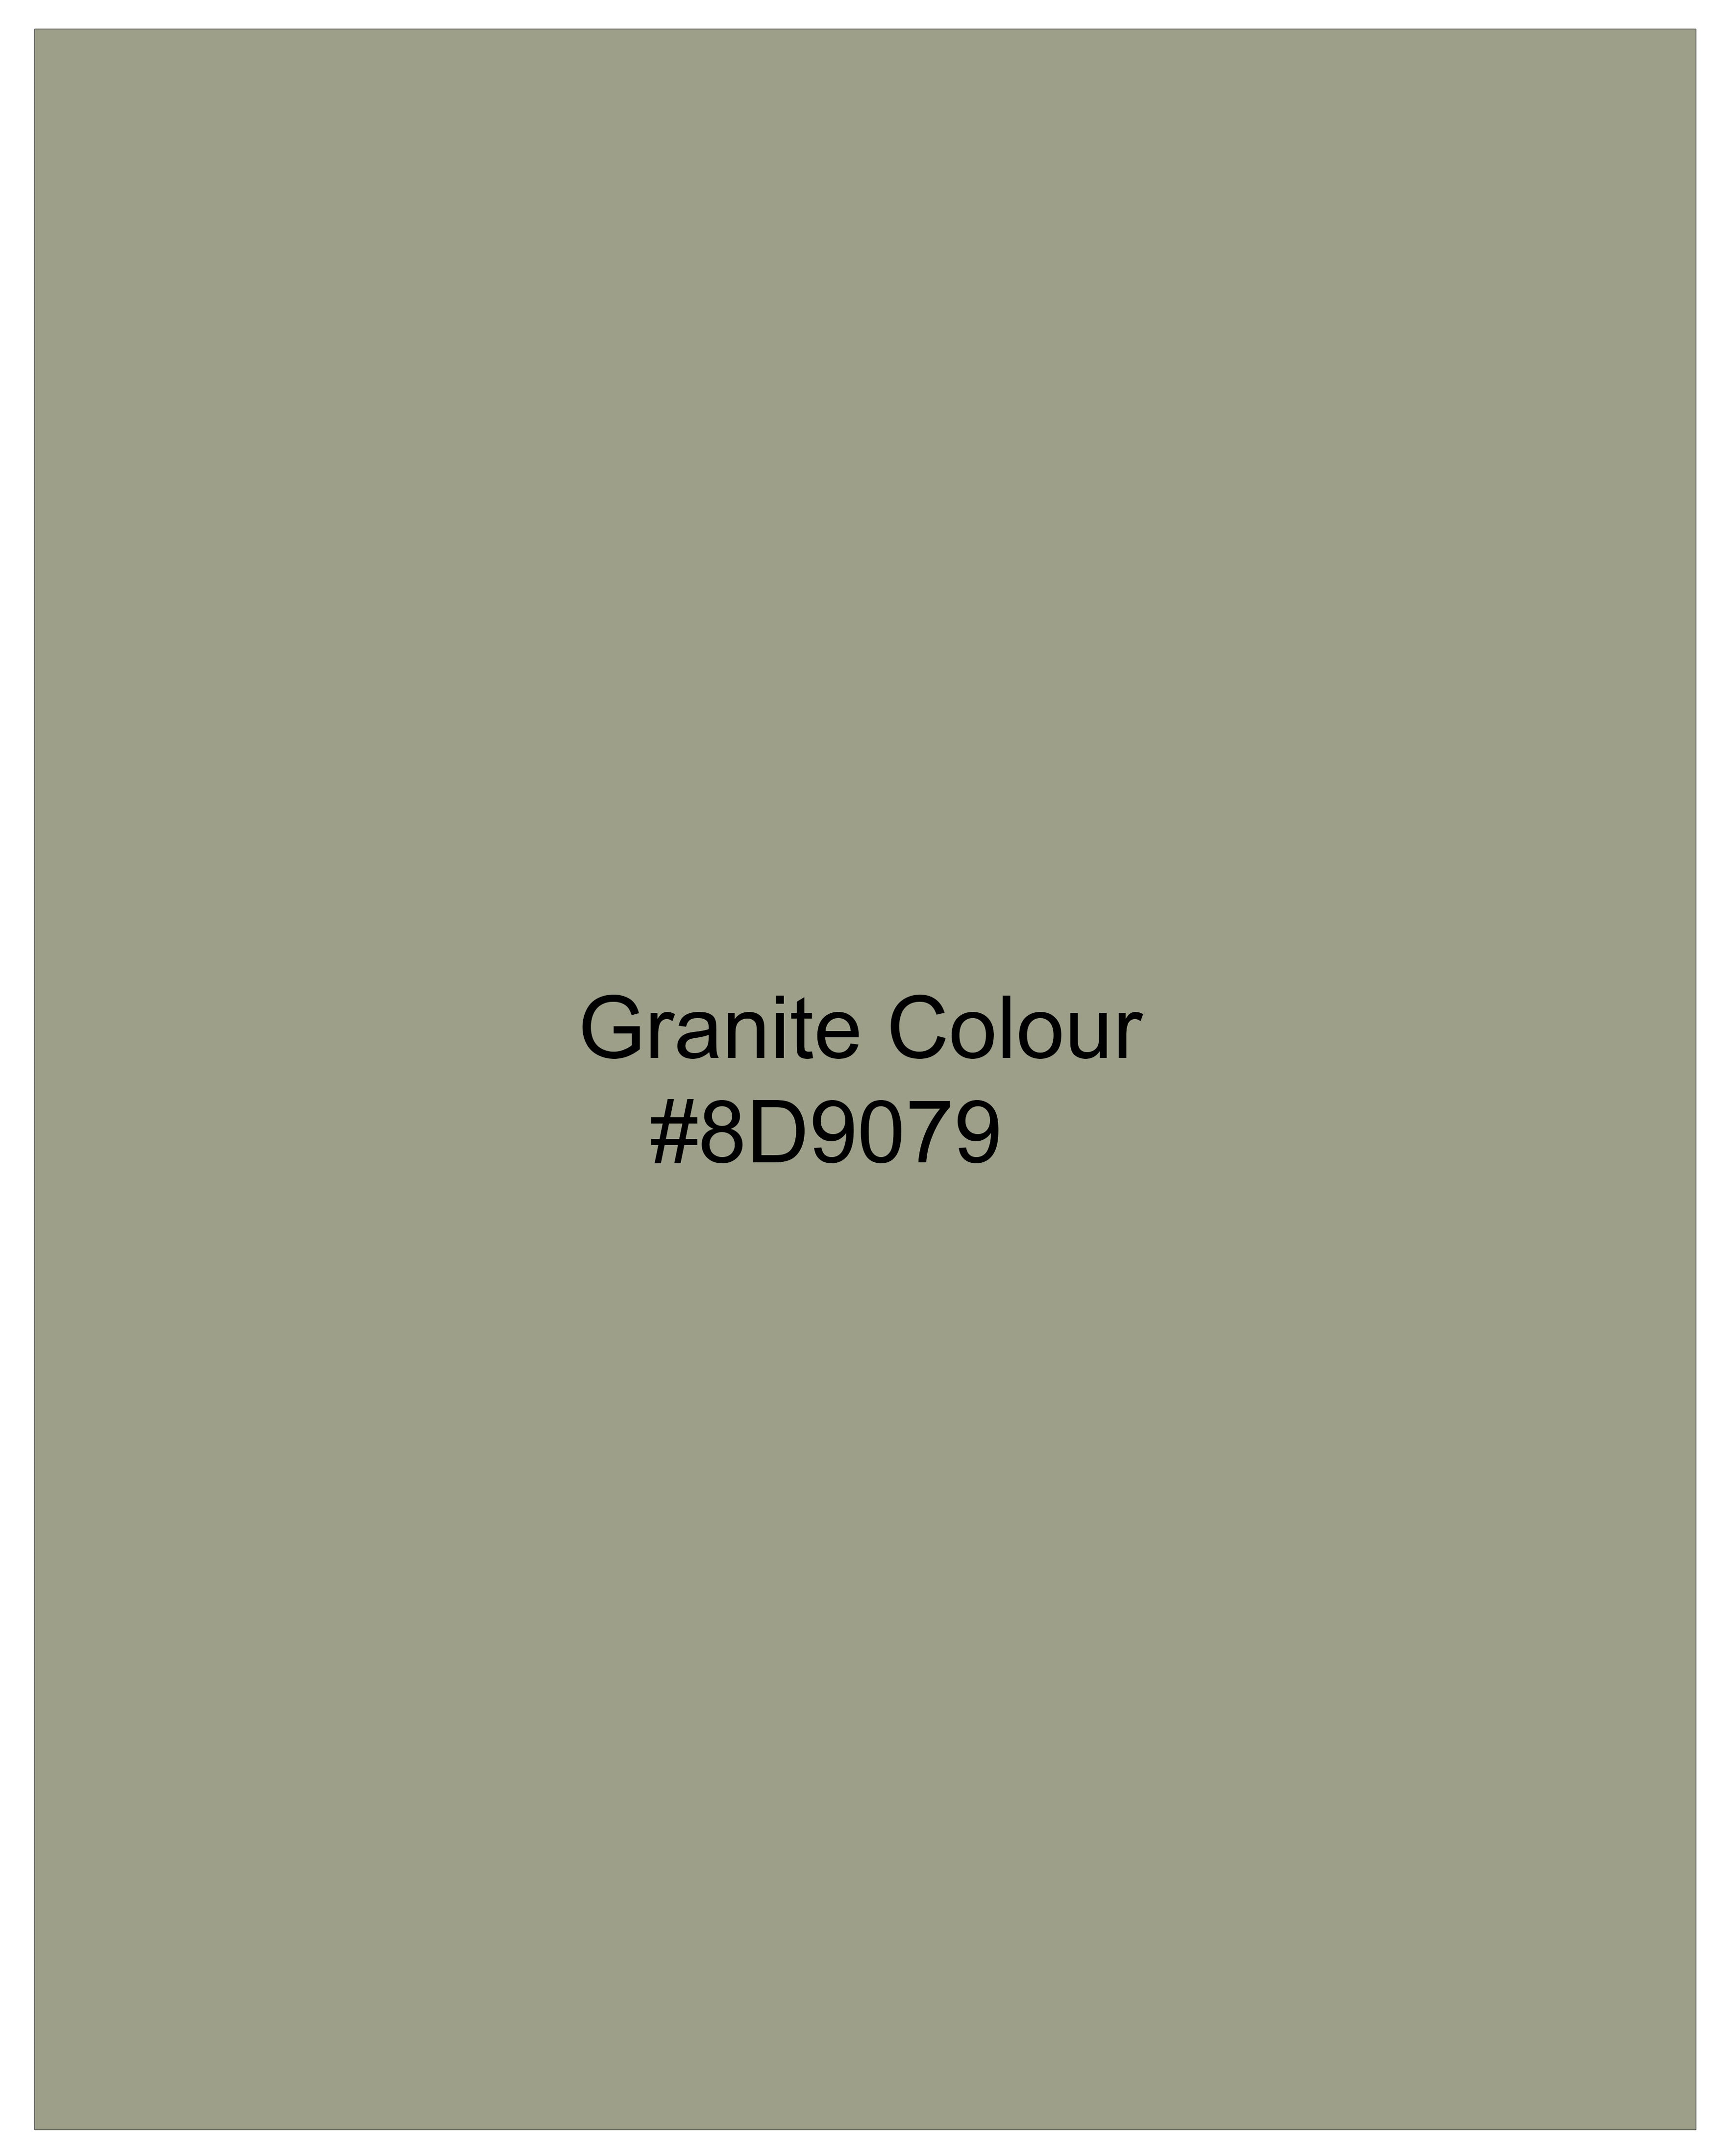 Granite Green Tuxedo With Black Lapel Premium Cotton Stretchable Blazer BL2666-BKL-36, BL2666-BKL-38, BL2666-BKL-40, BL2666-BKL-42, BL2666-BKL-44, BL2666-BKL-46, BL2666-BKL-48, BL2666-BKL-50, BL2666-BKL-52, BL2666-BKL-54, BL2666-BKL-56, BL2666-BKL-58, BL2666-BKL-60